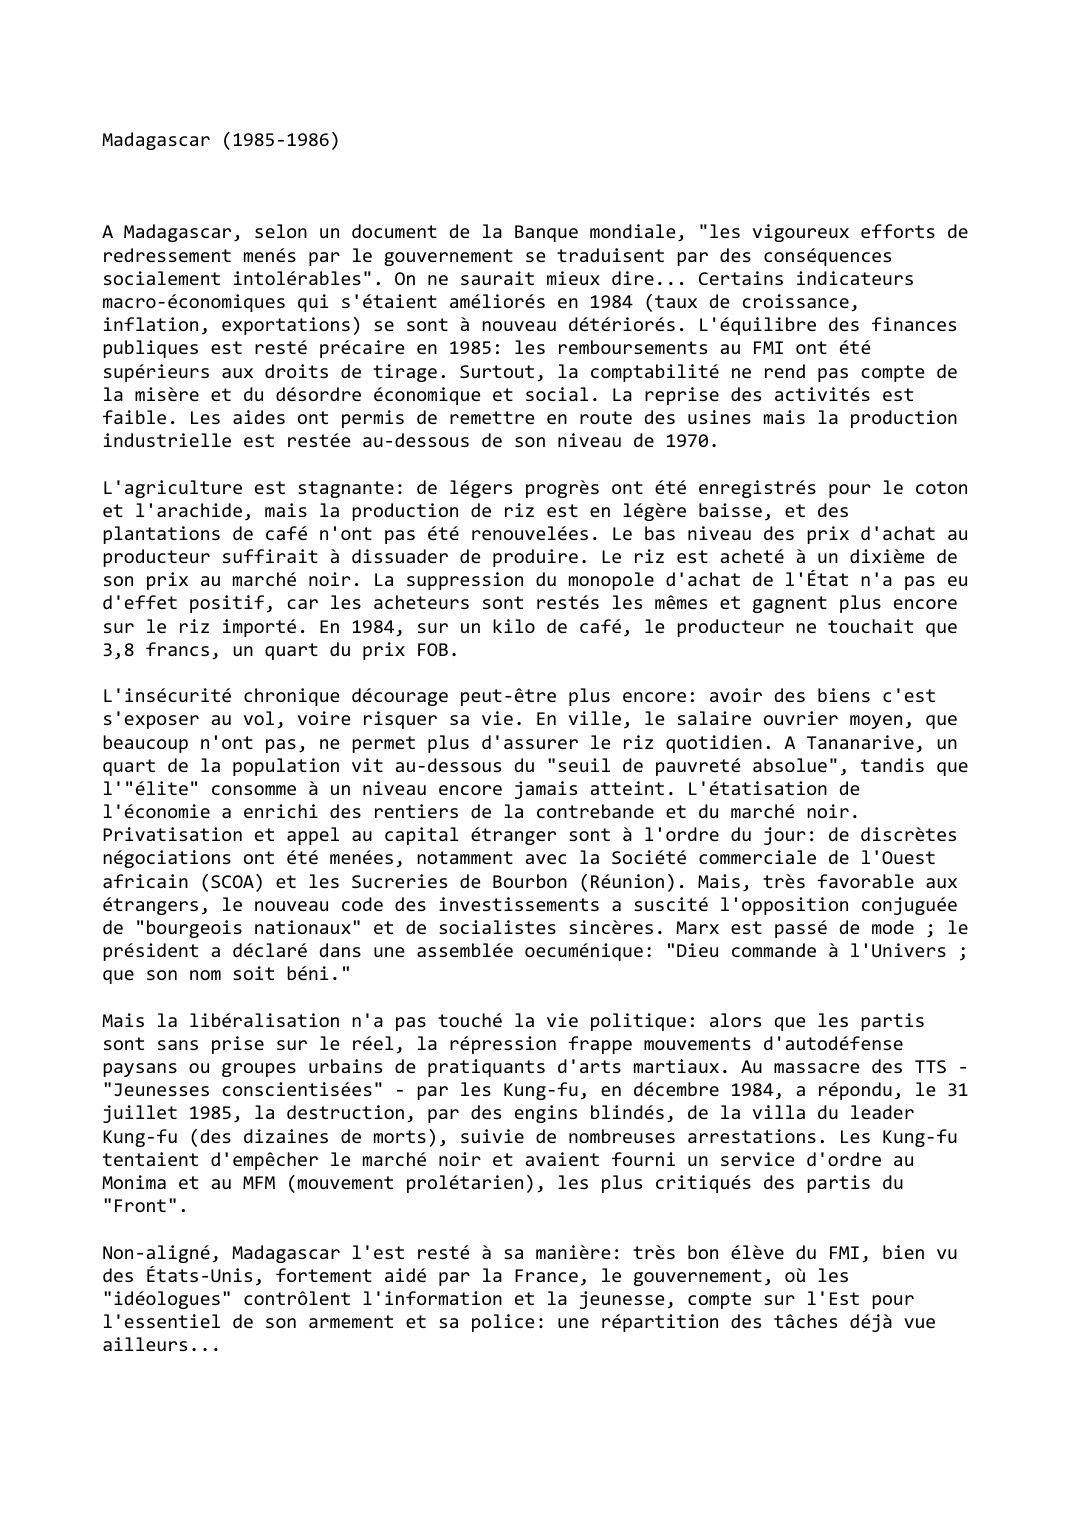 Prévisualisation du document Madagascar (1985-1986)